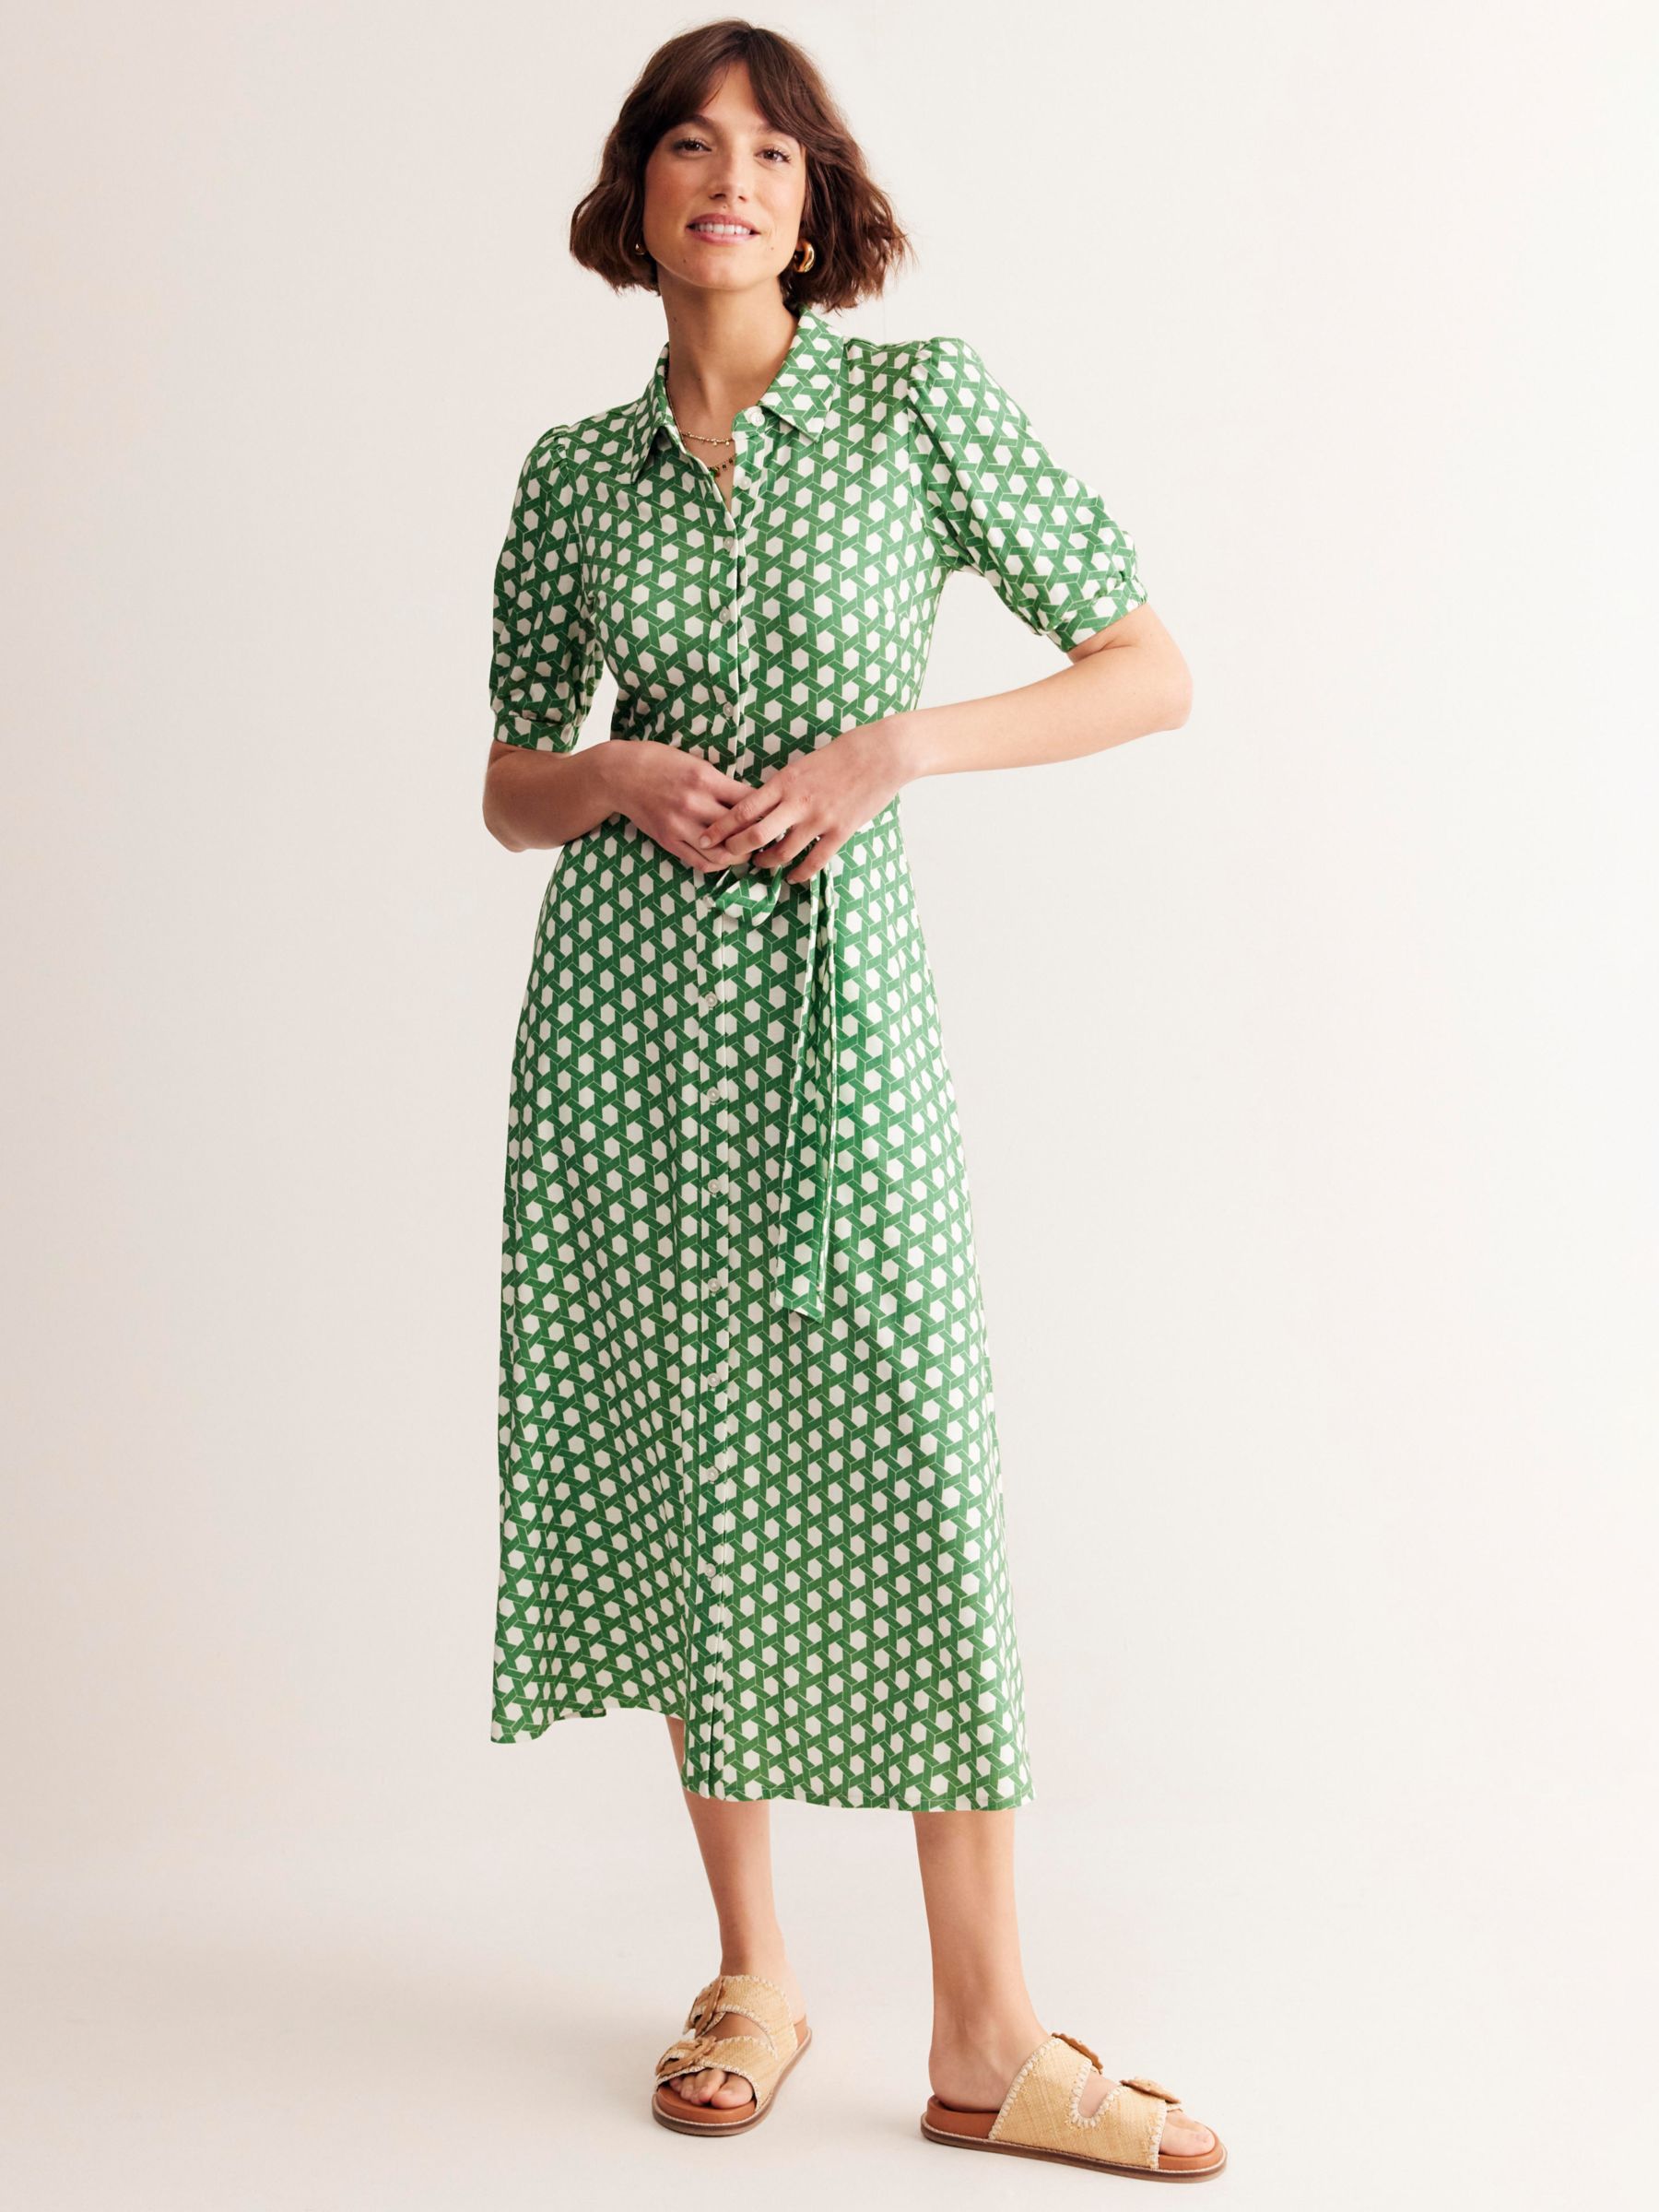 Boden Libby Honeycomb Geometric Jersey Dress, Green, 8